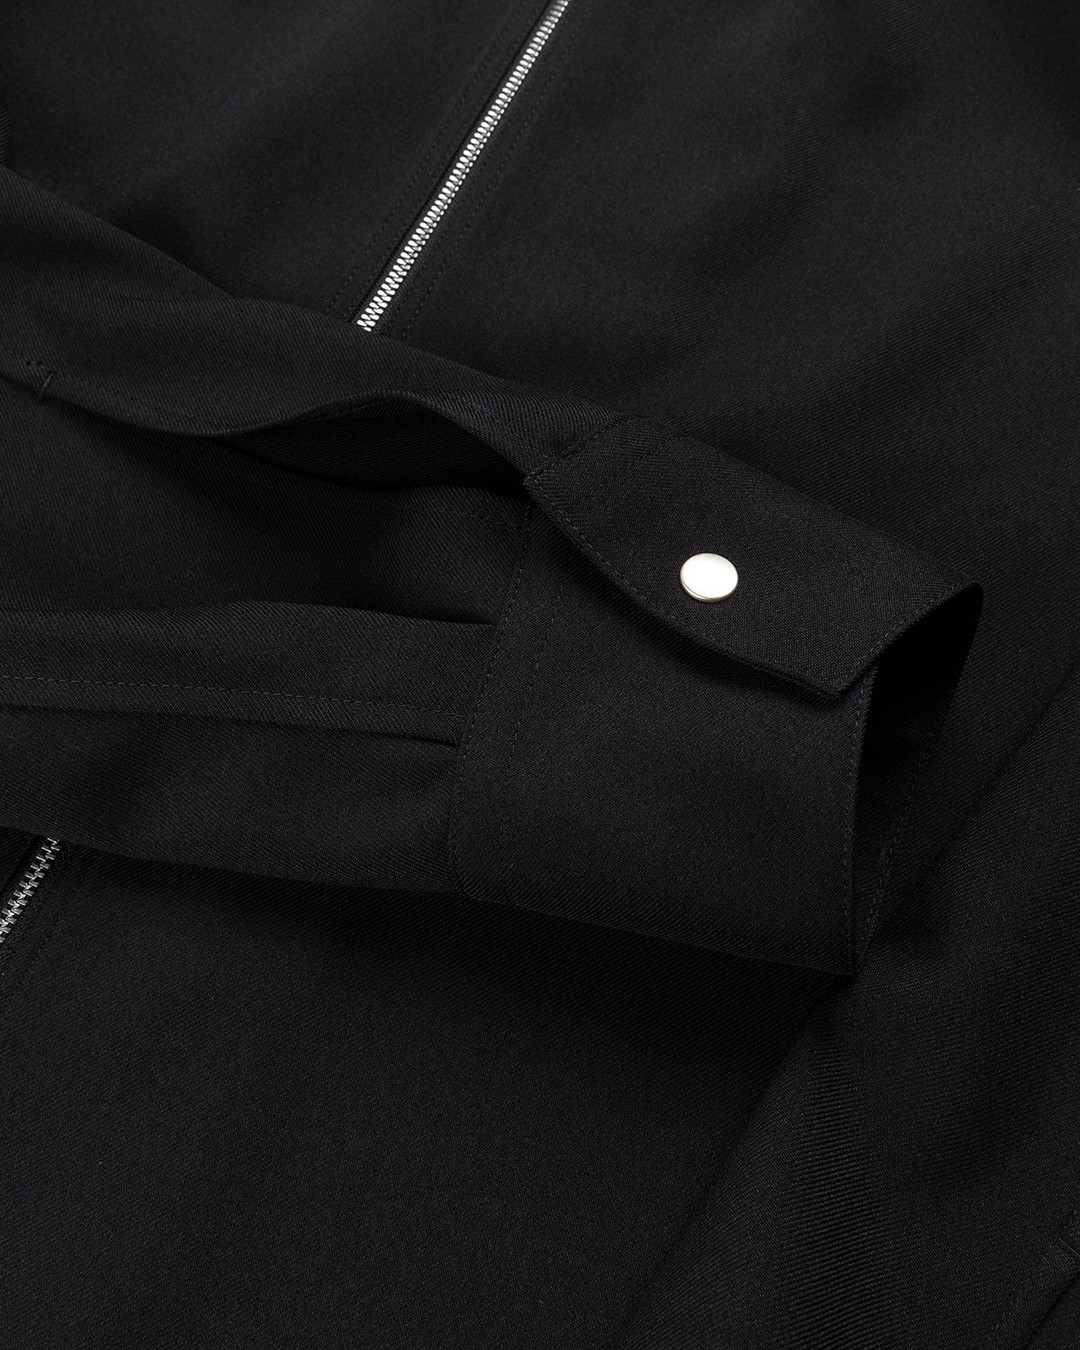 Jil Sander – Full Zip Shirt Black - Shirts - Black - Image 3